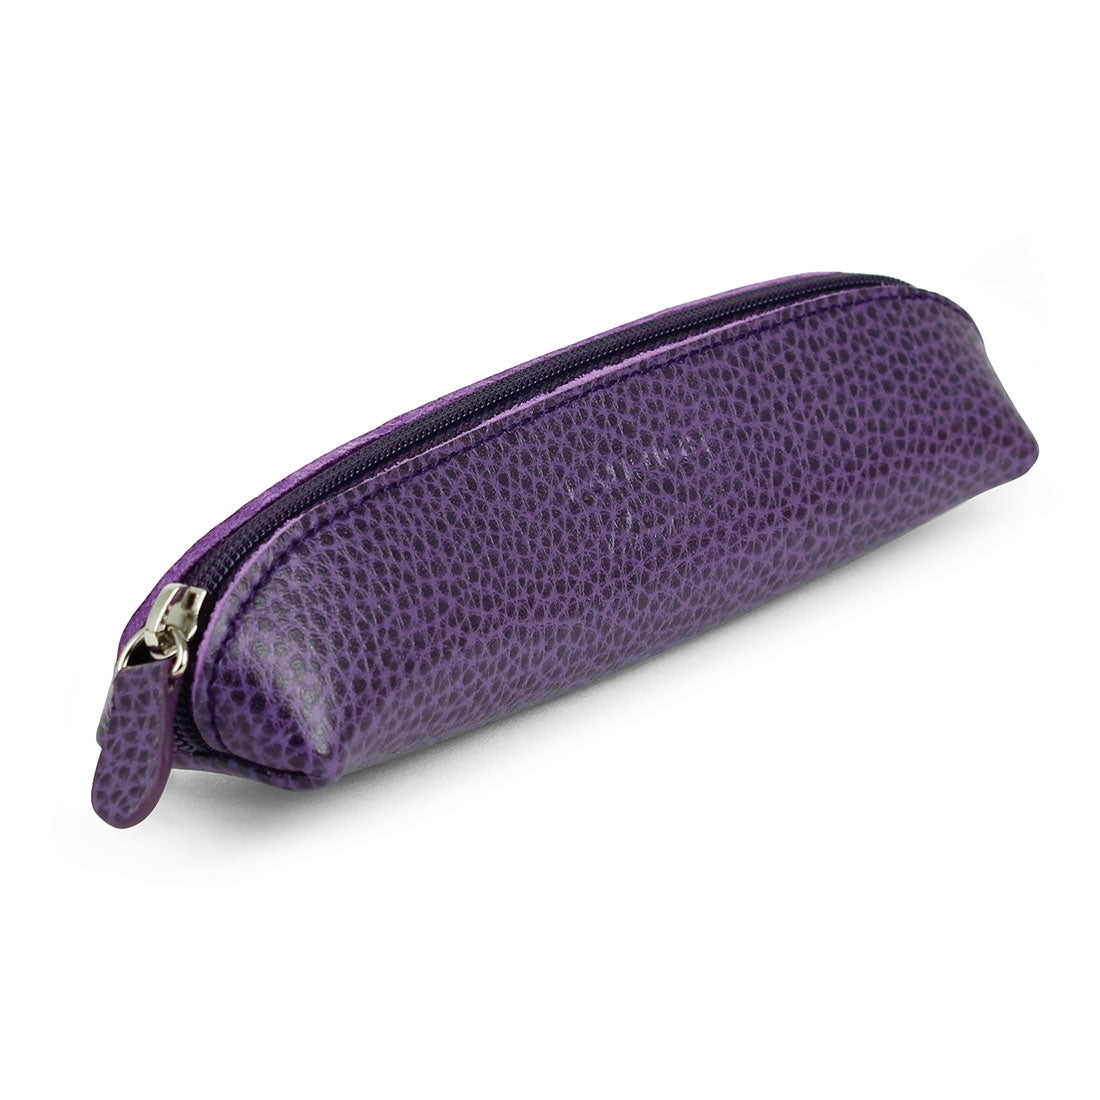 Small Pen Holder - Violet#colour_laurige-violet